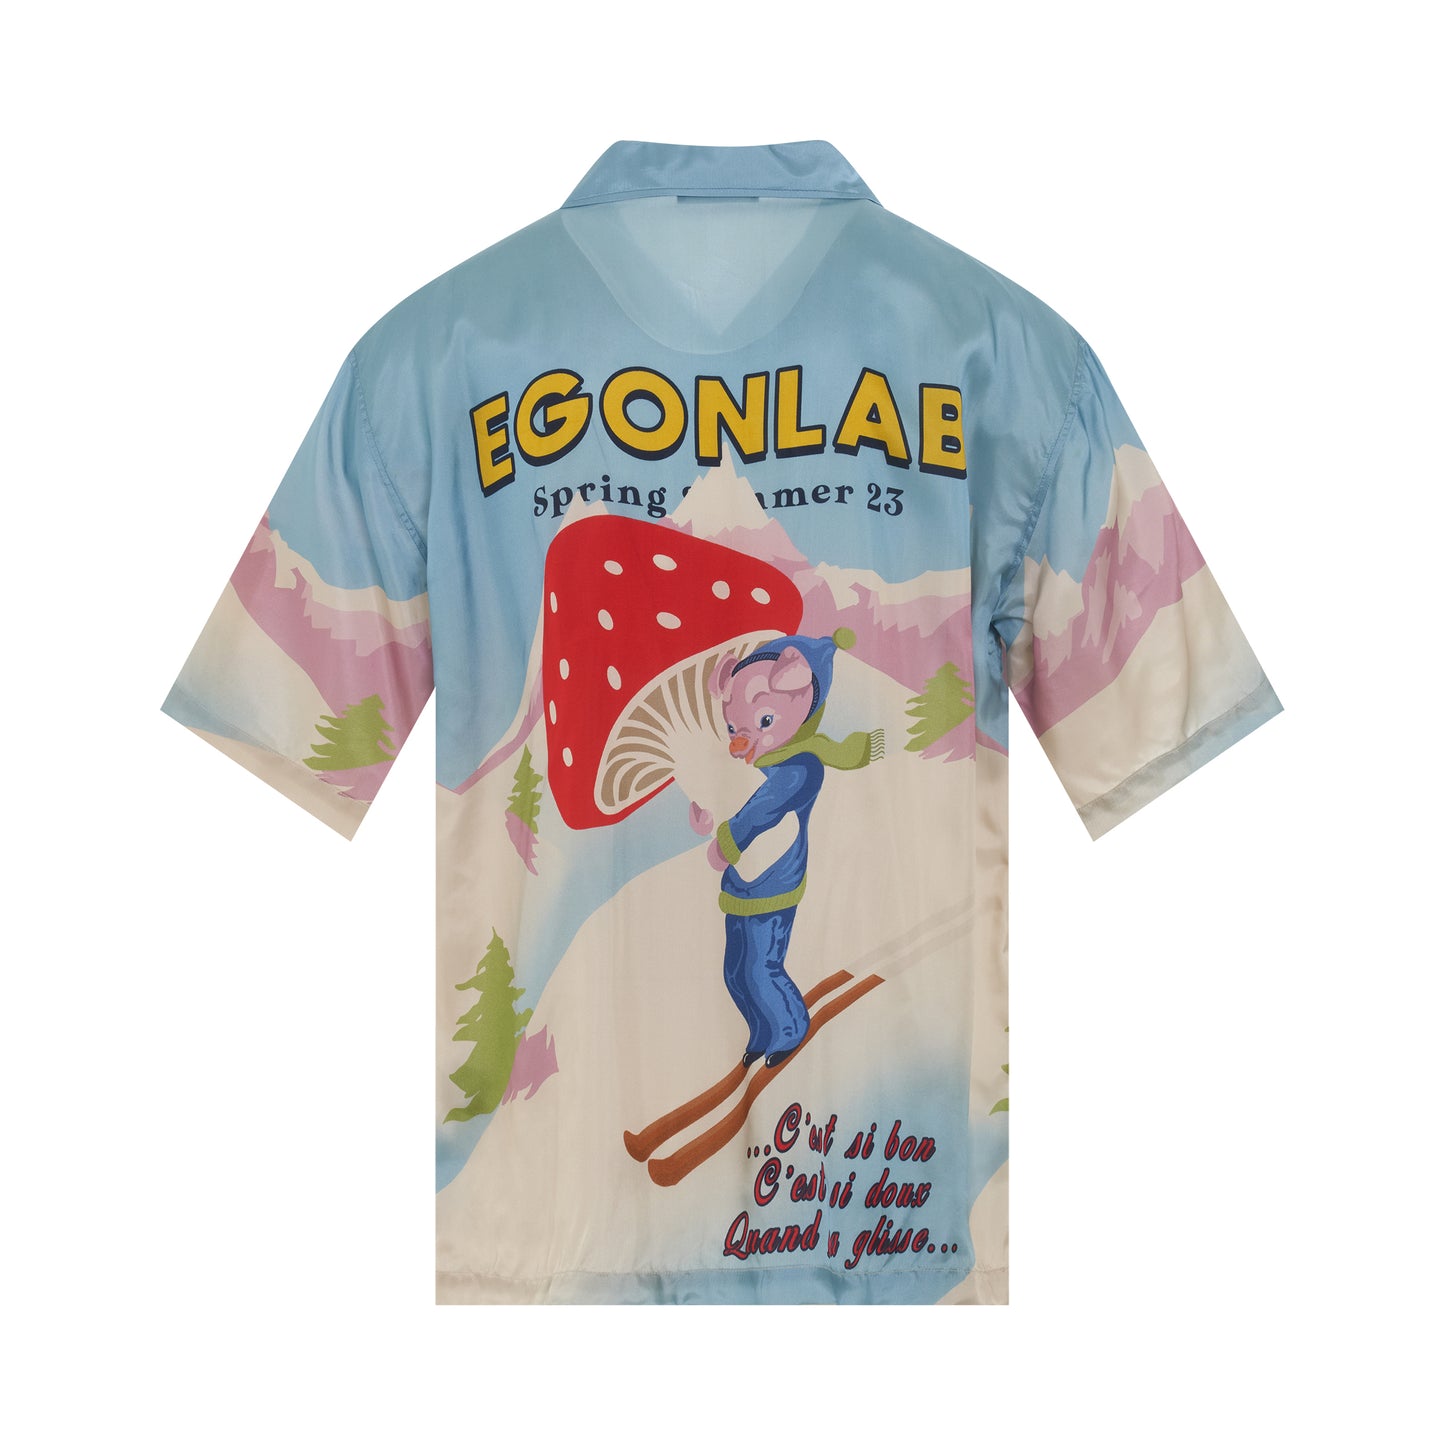 Wonderland Summer Shirt in Piggy Print